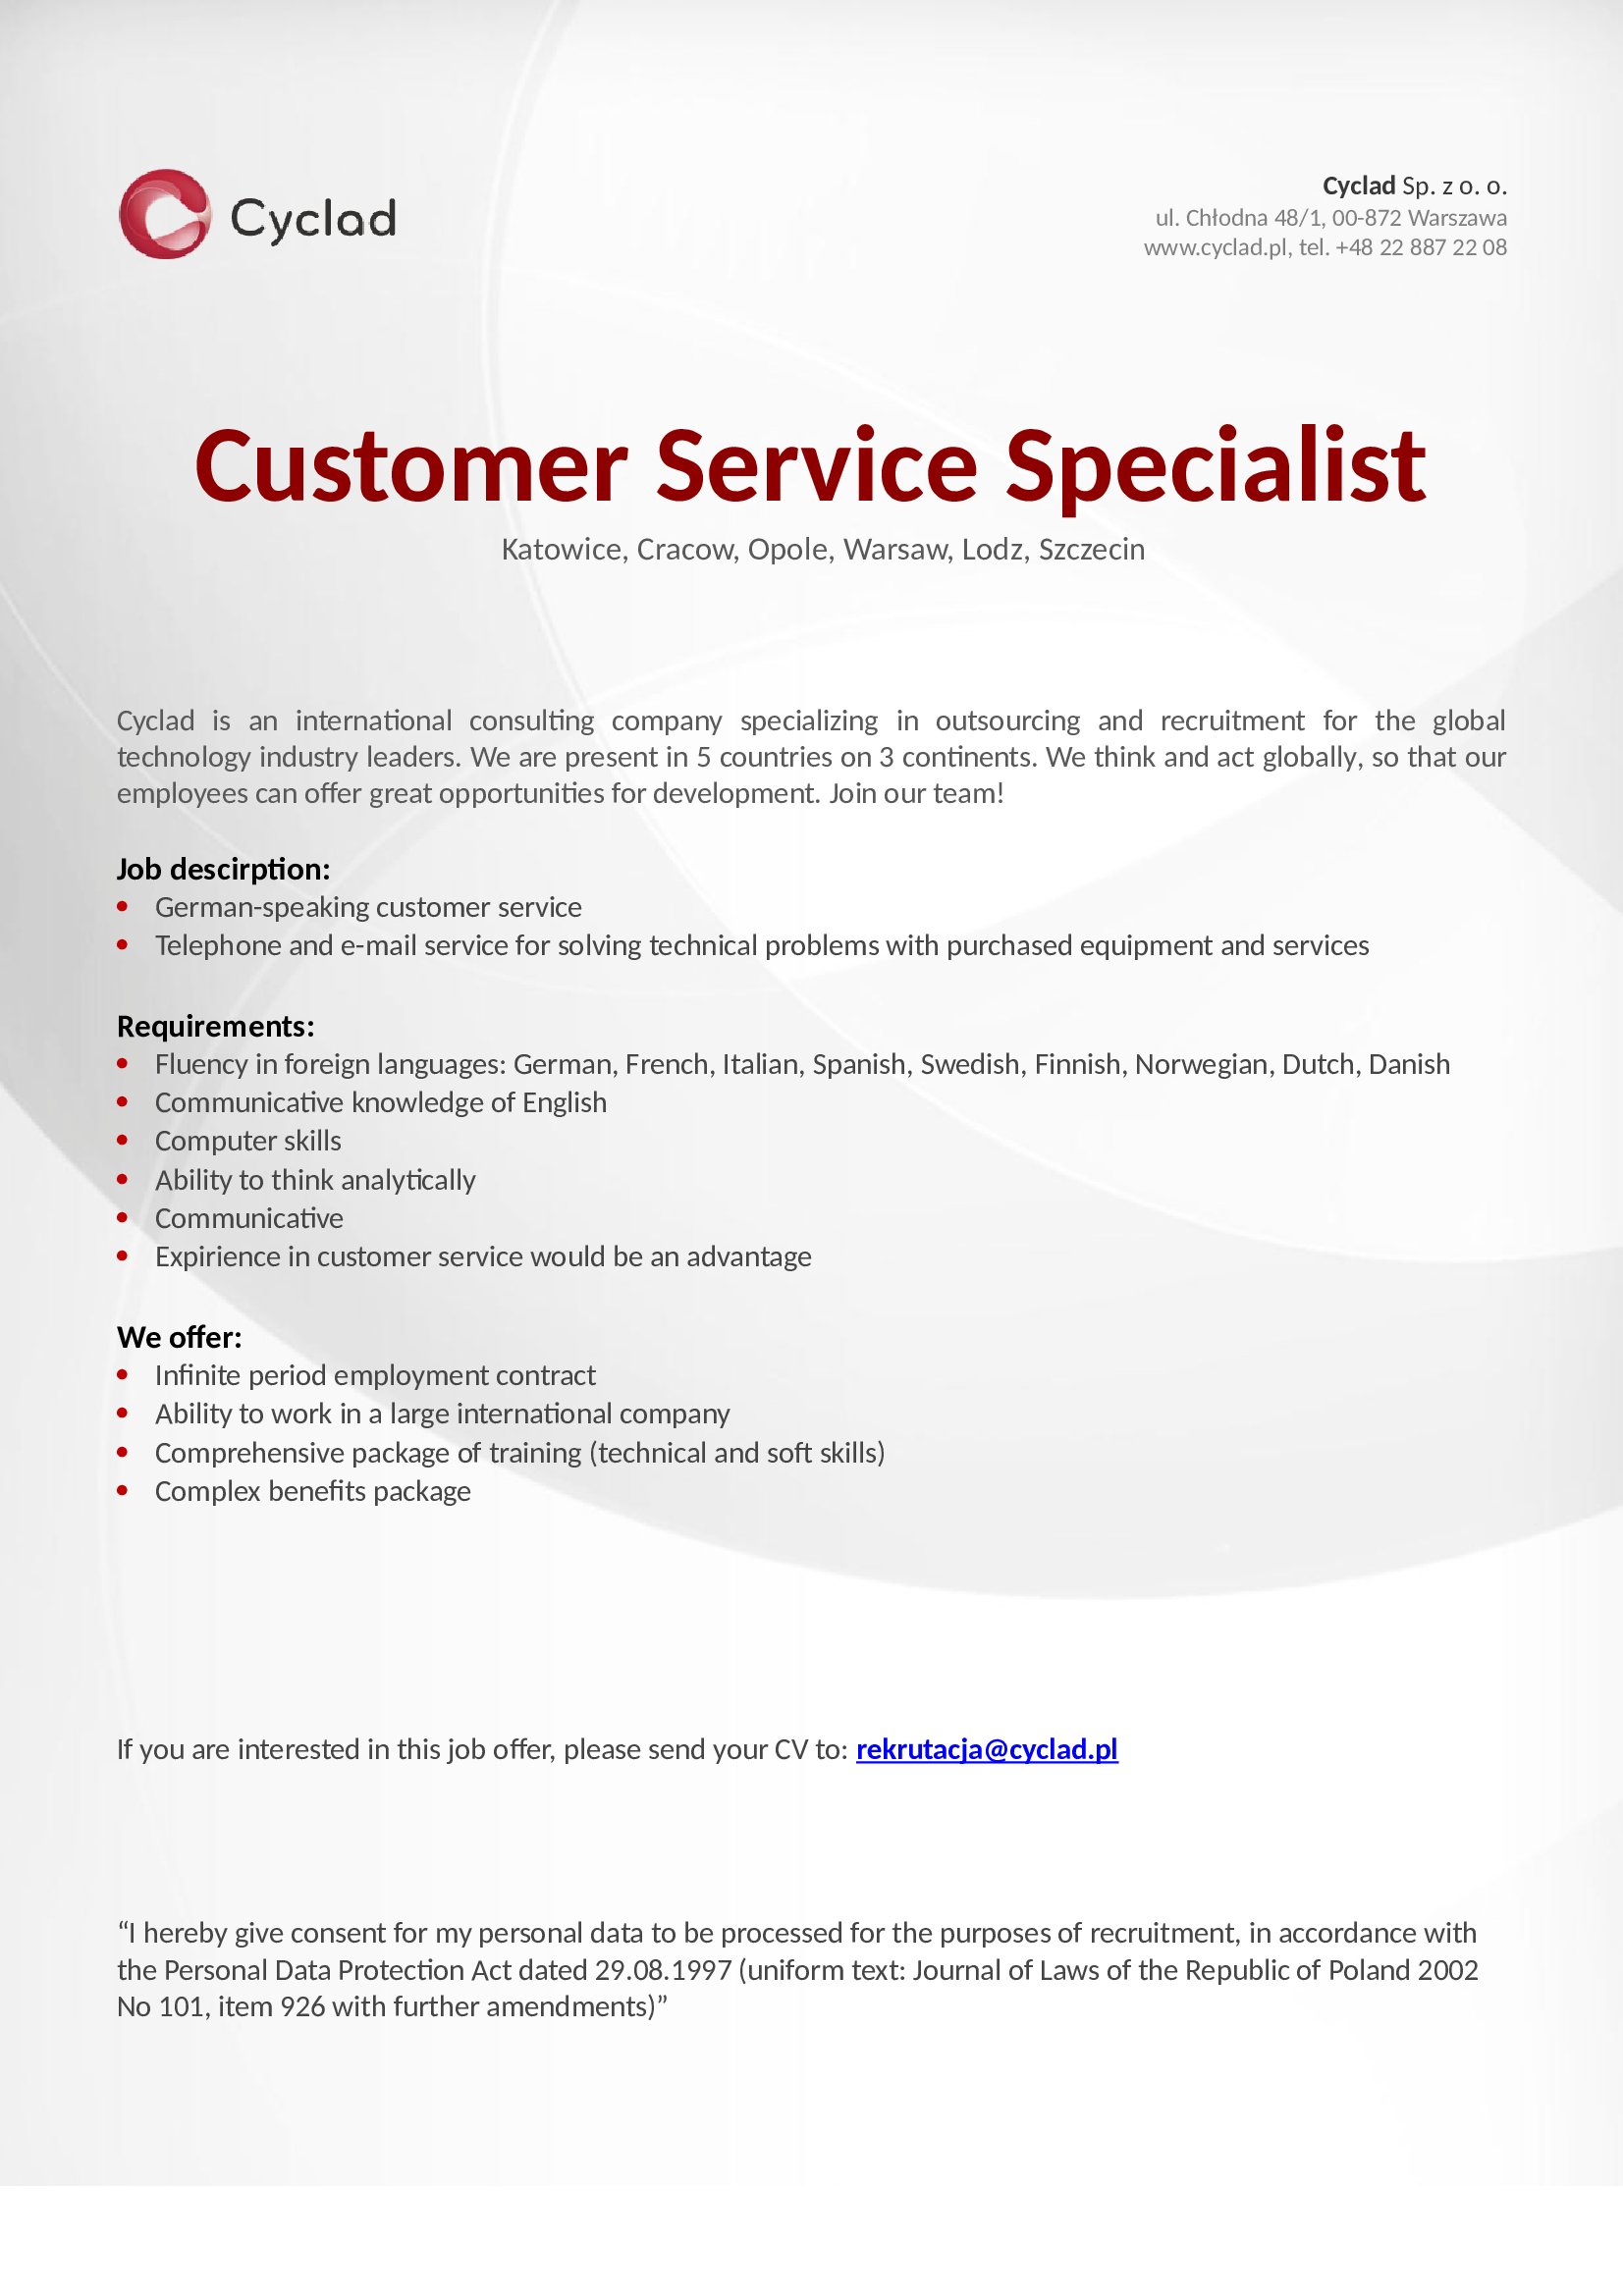 CYCLAD_Customer_Service_Specialist